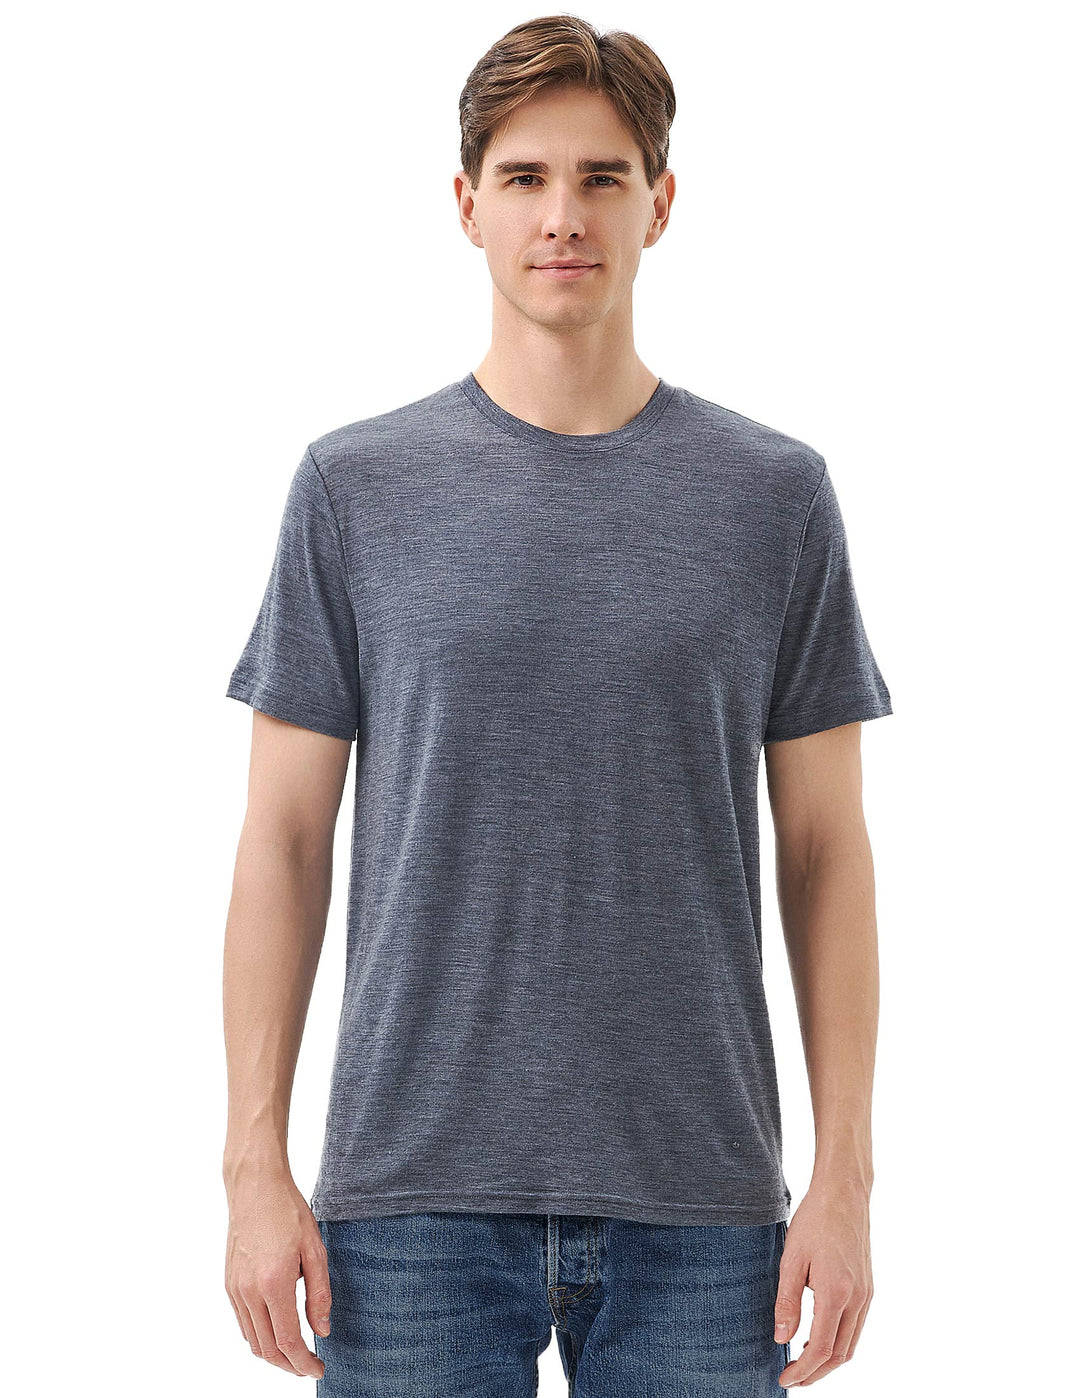 Men's 100% Merino Wool T-Shirt Dark Grey - MT27